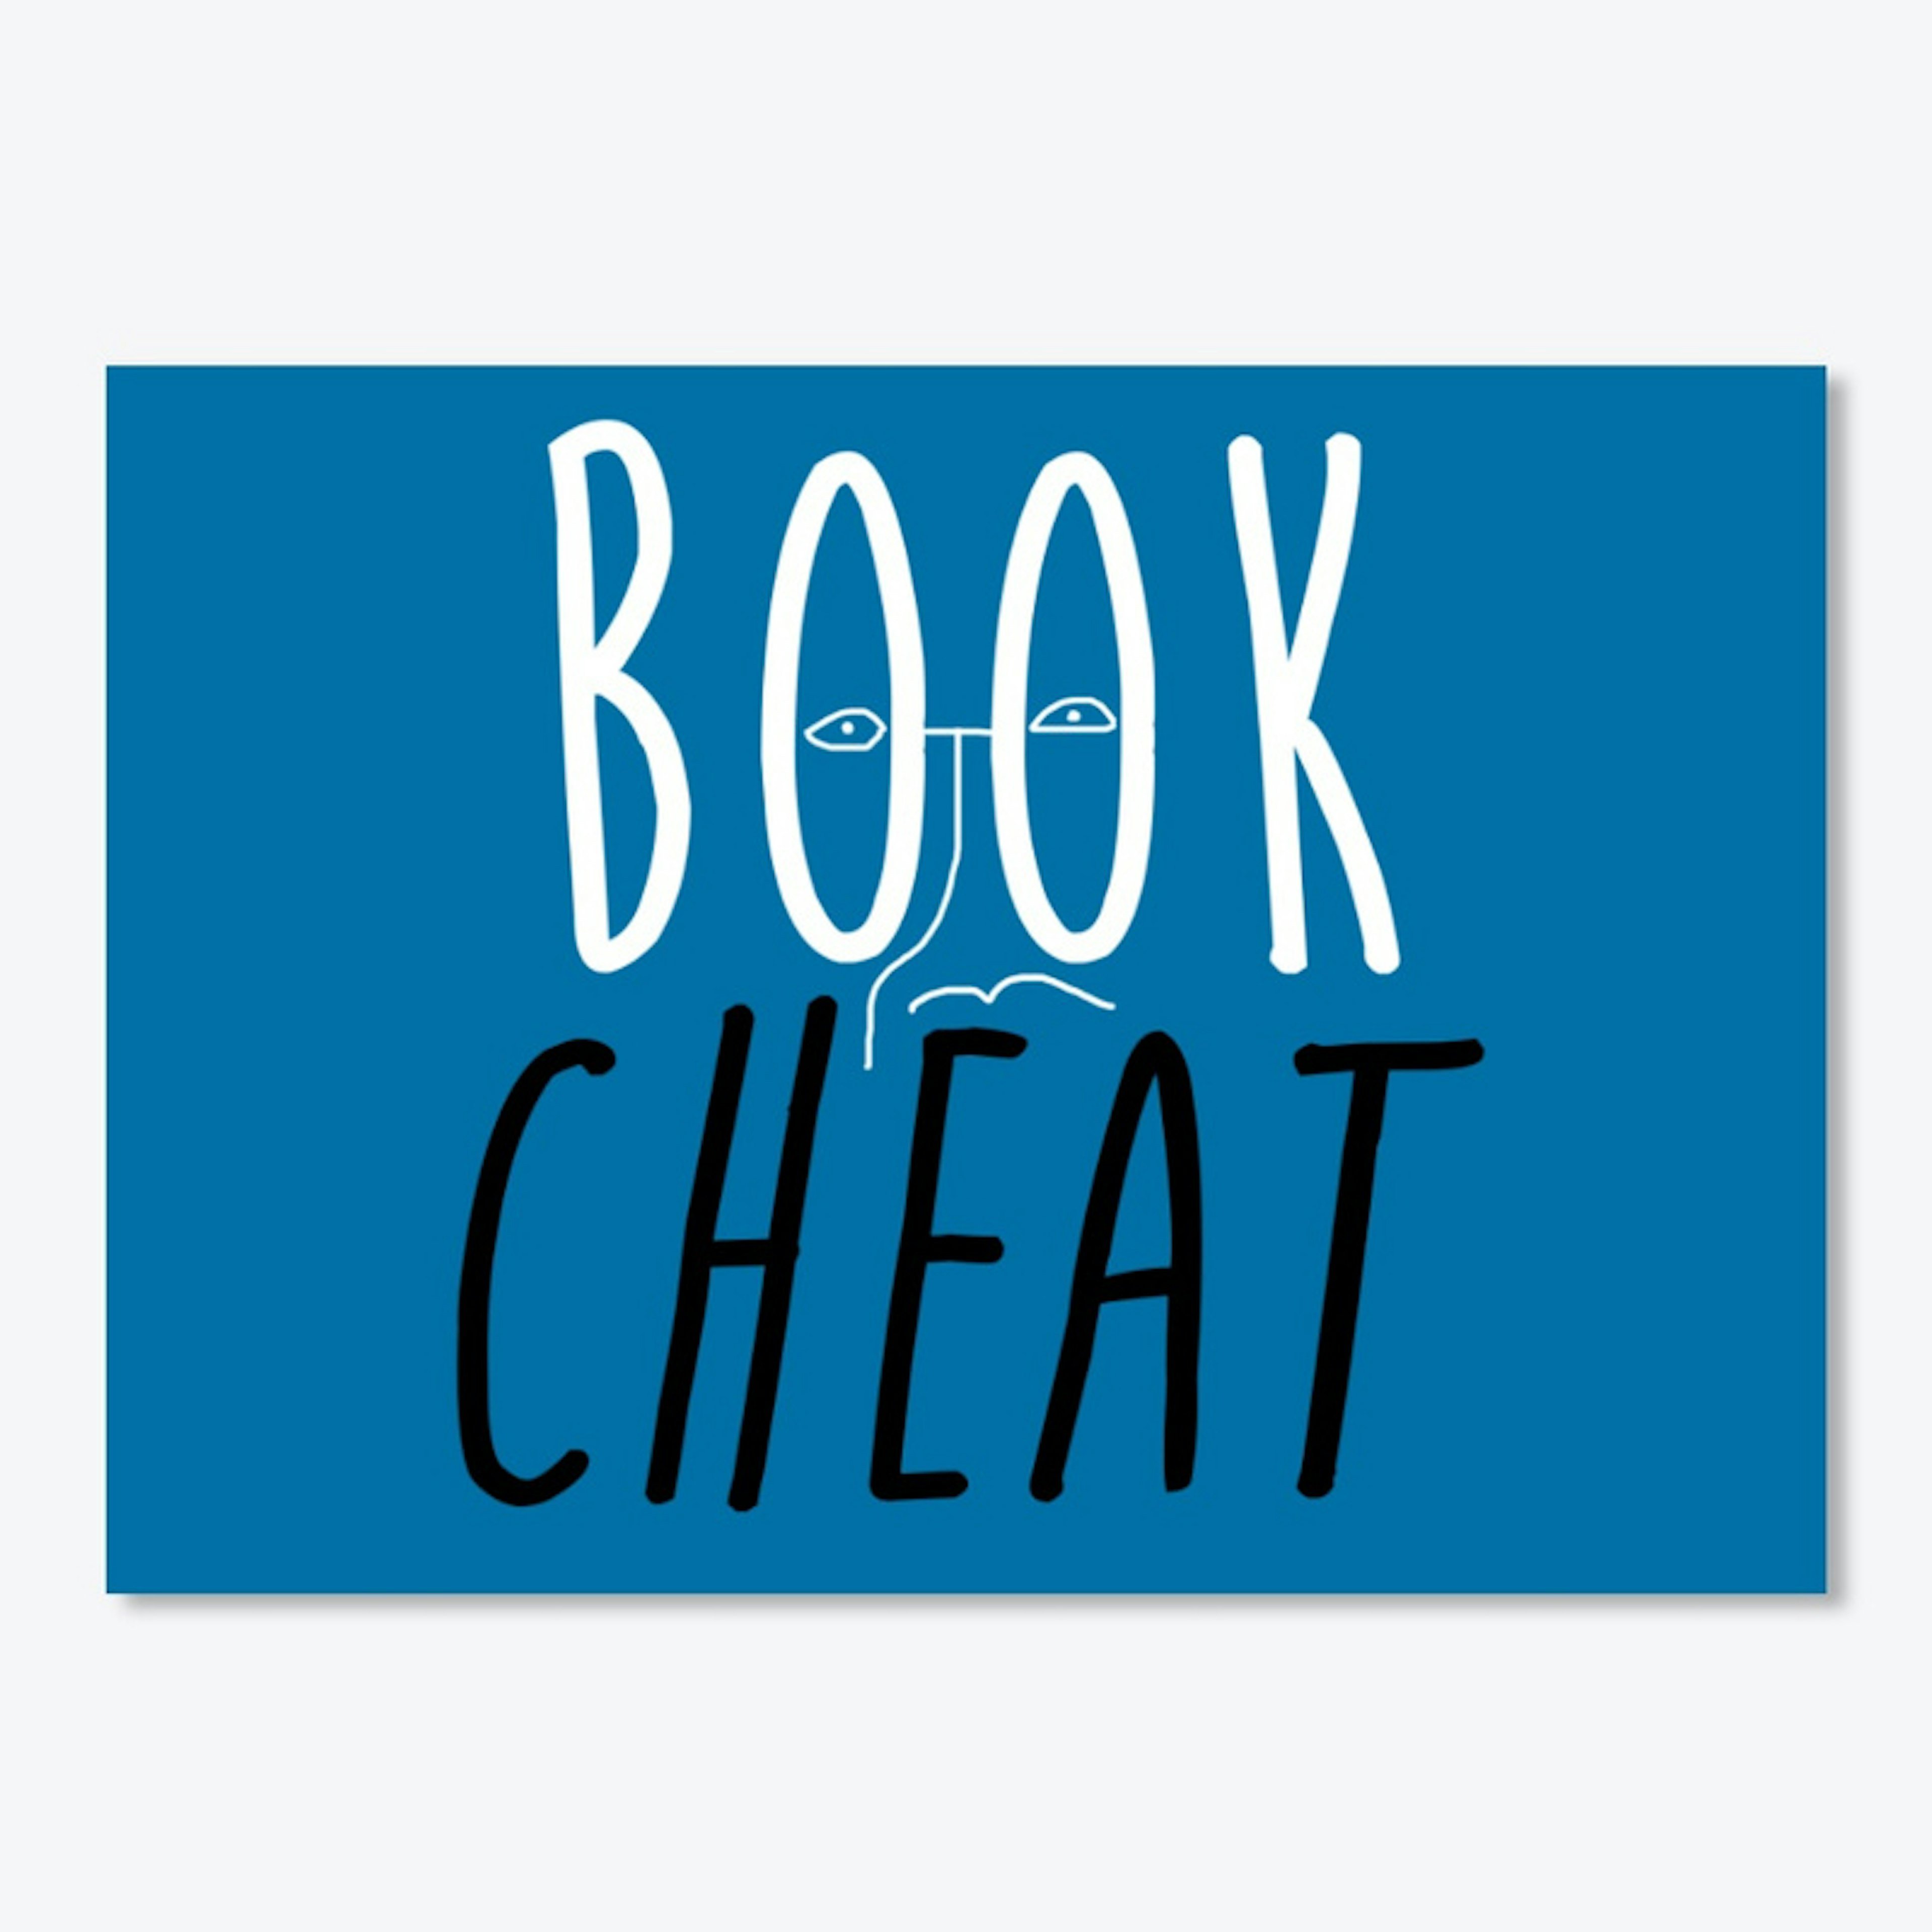 Book Cheat Sticker 